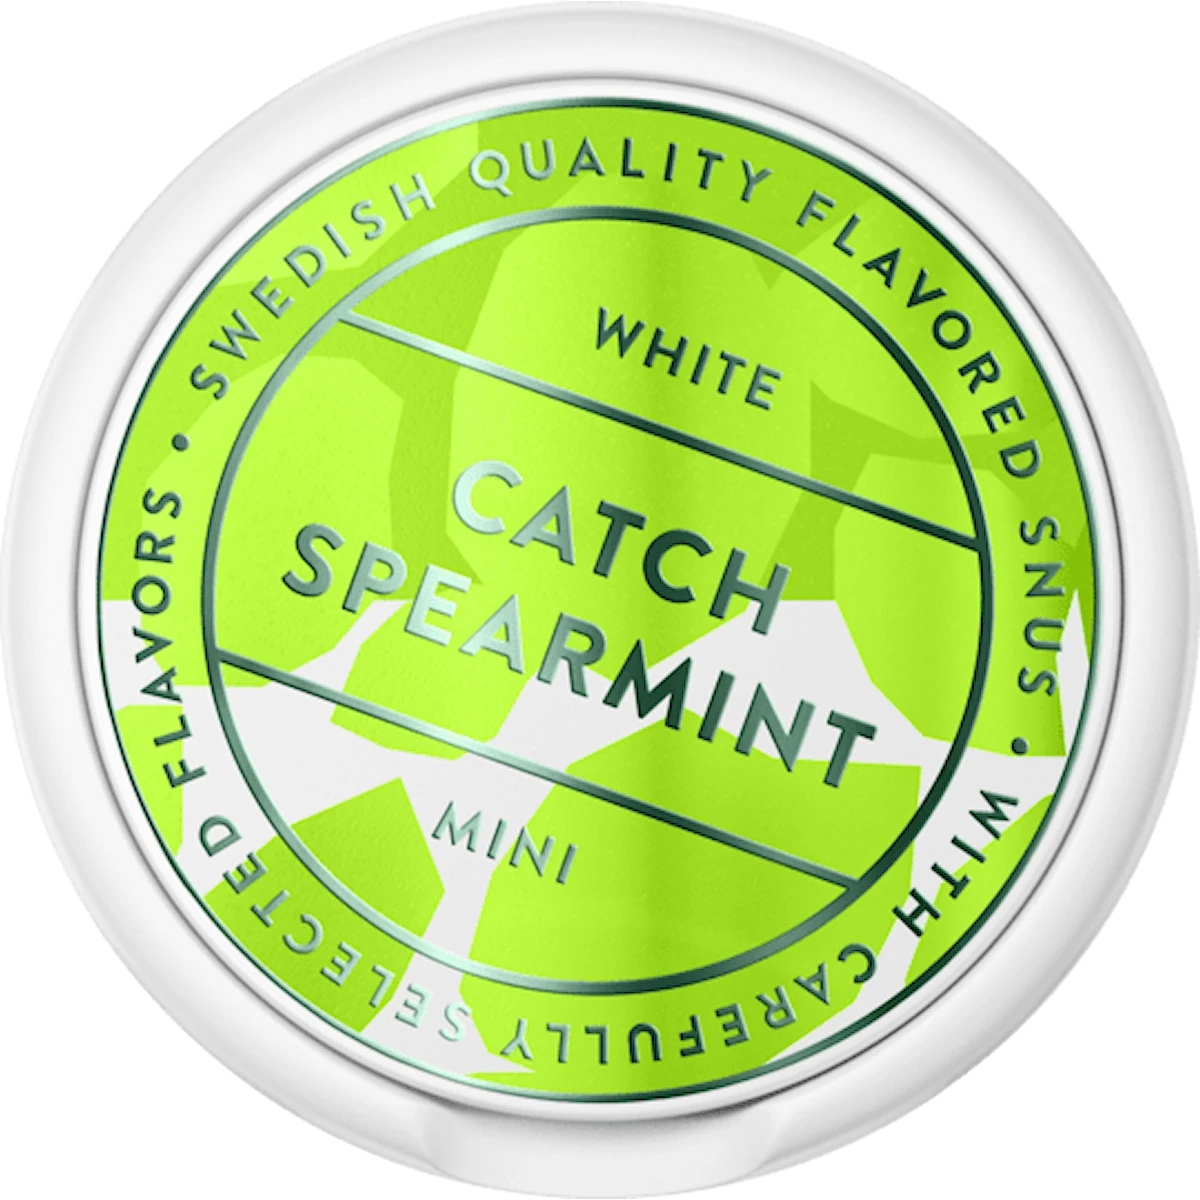 Catch Spearmint White Mini